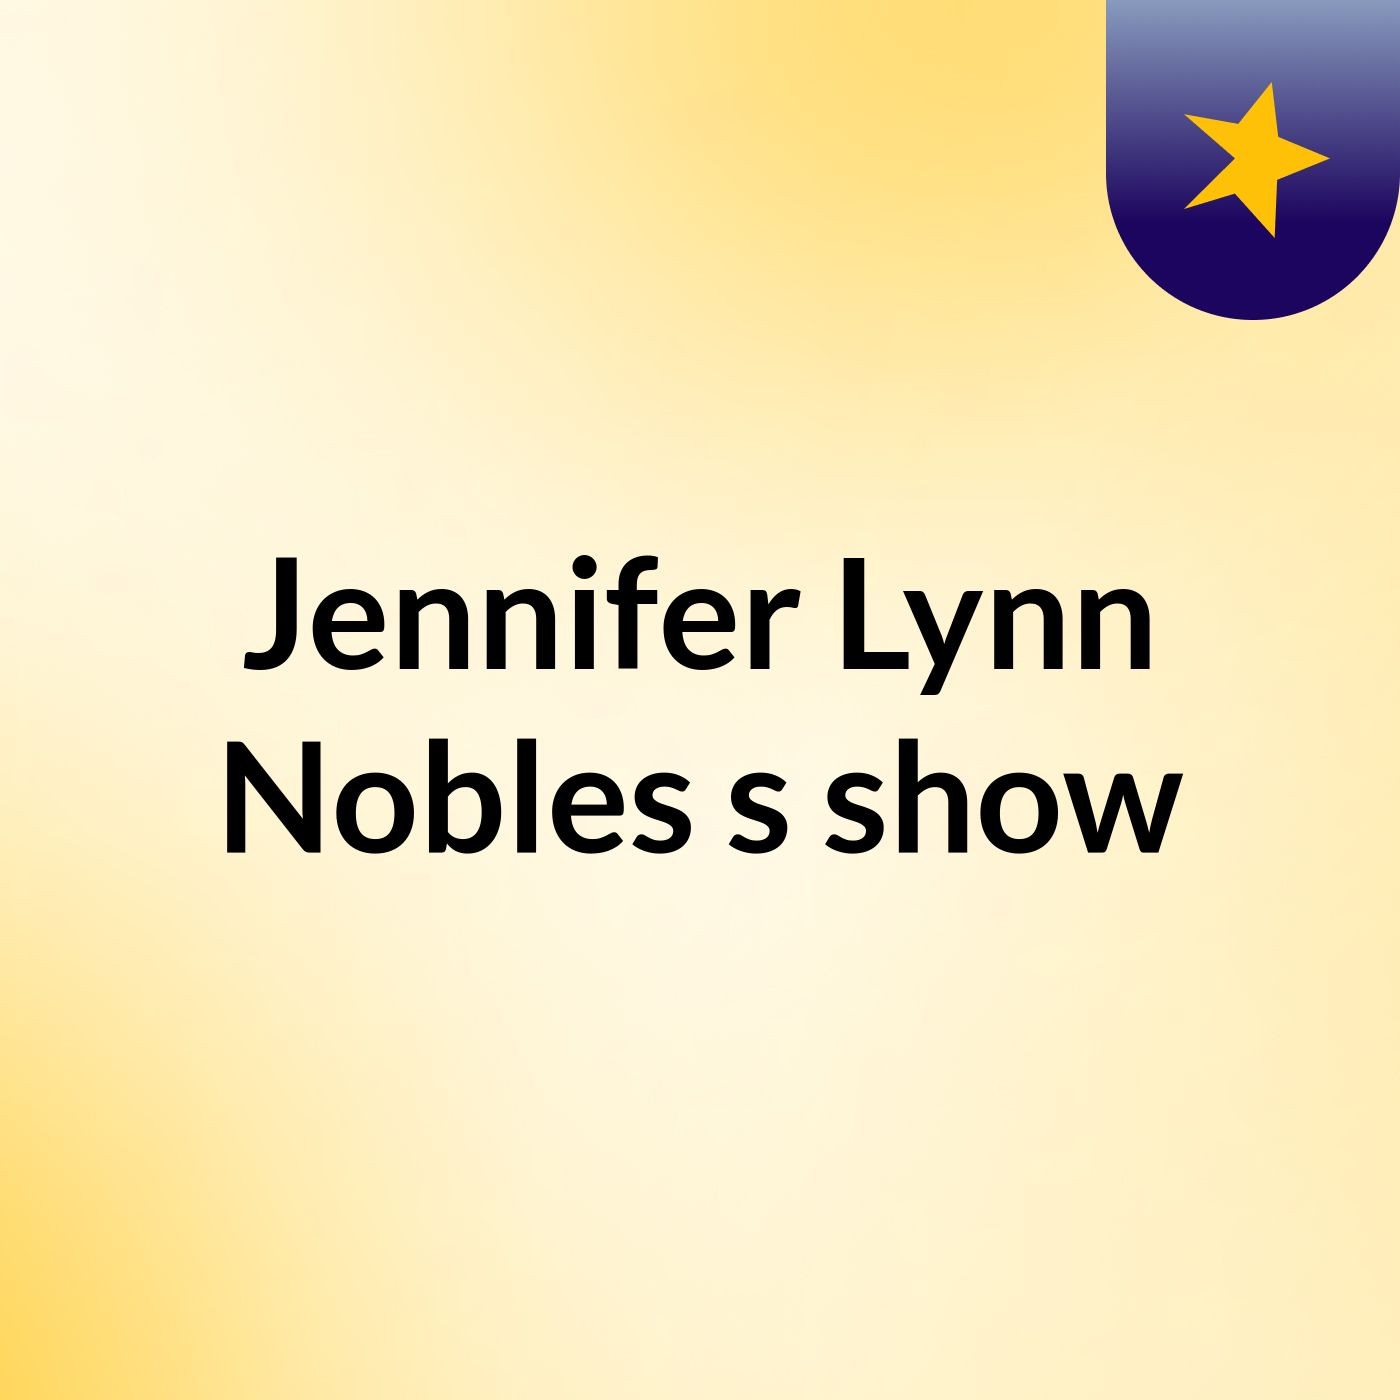 Jennifer Lynn Nobles's show